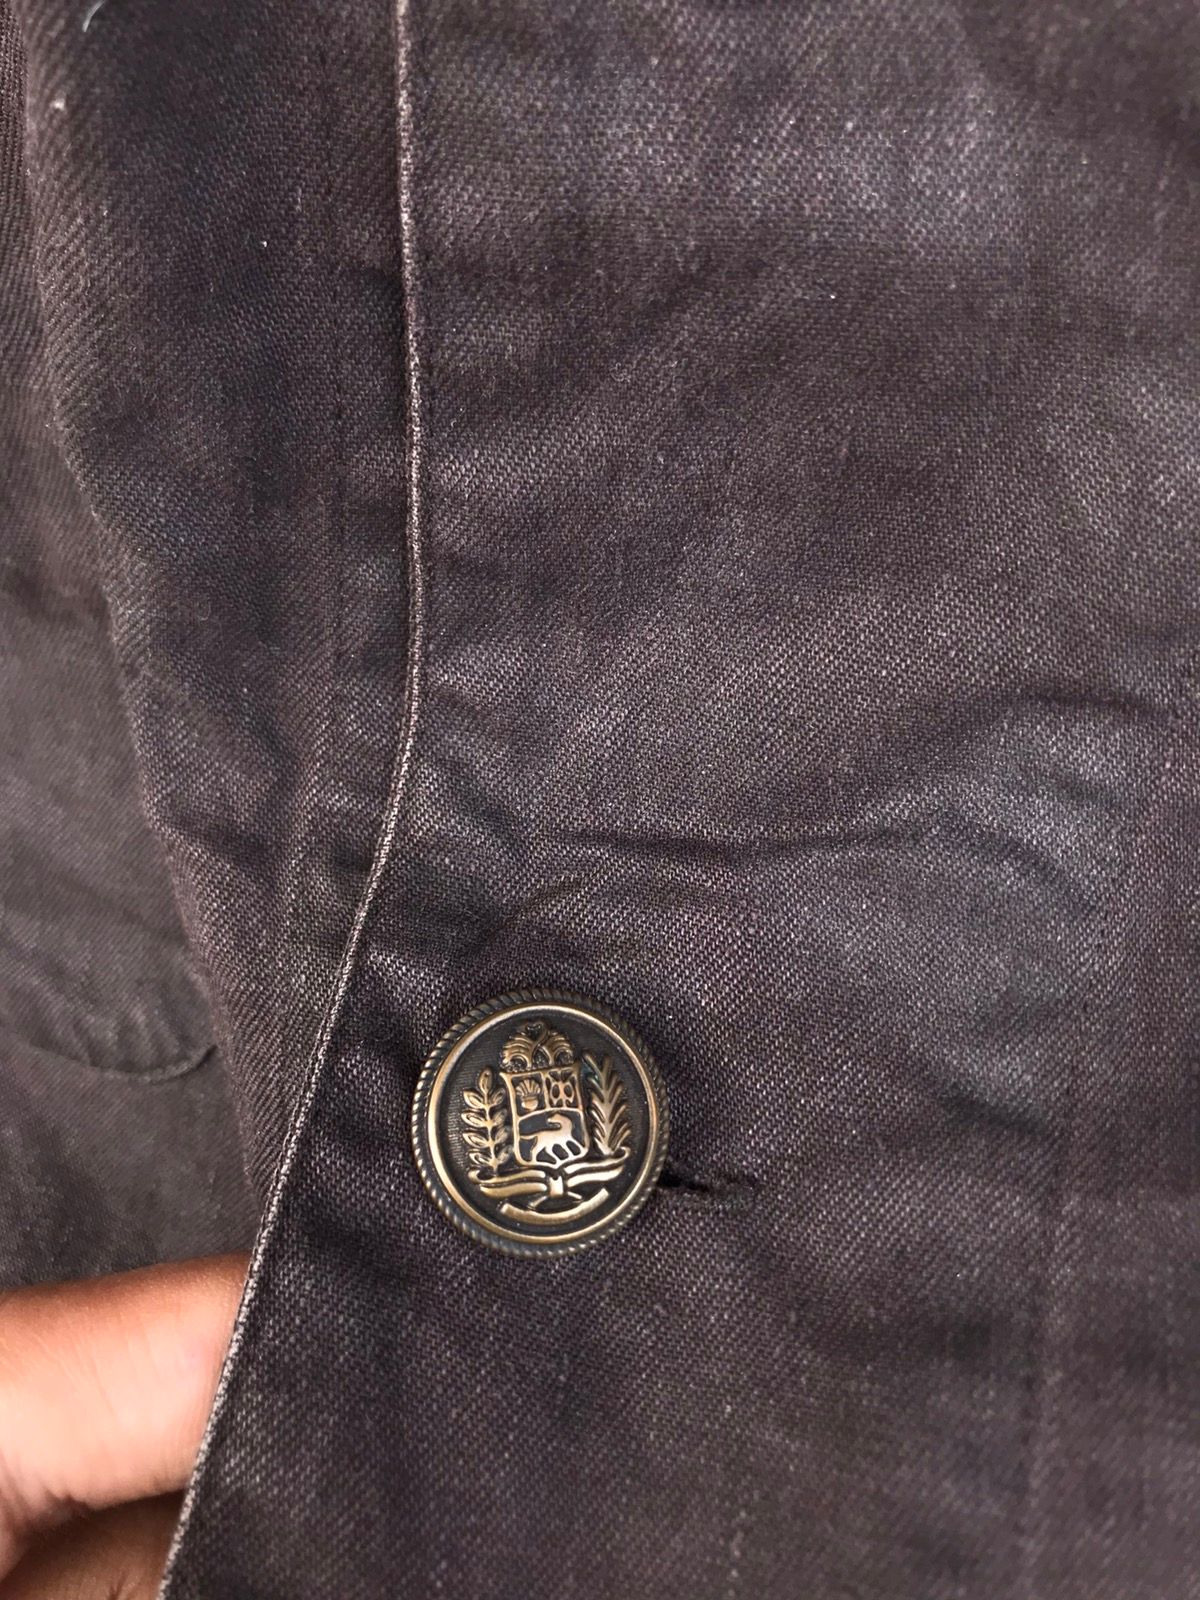 Dries Van Noten jacket double Pocket Rare Button - 3